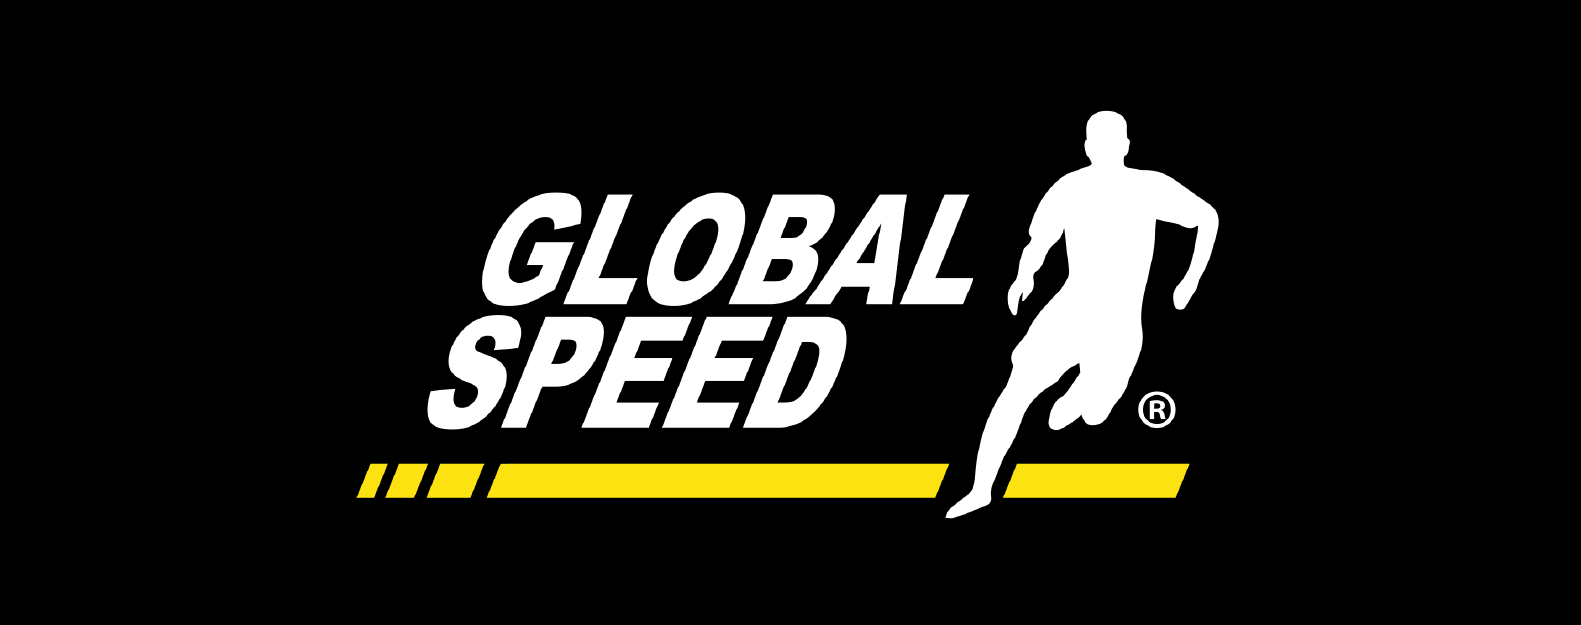 GlobalSpeed